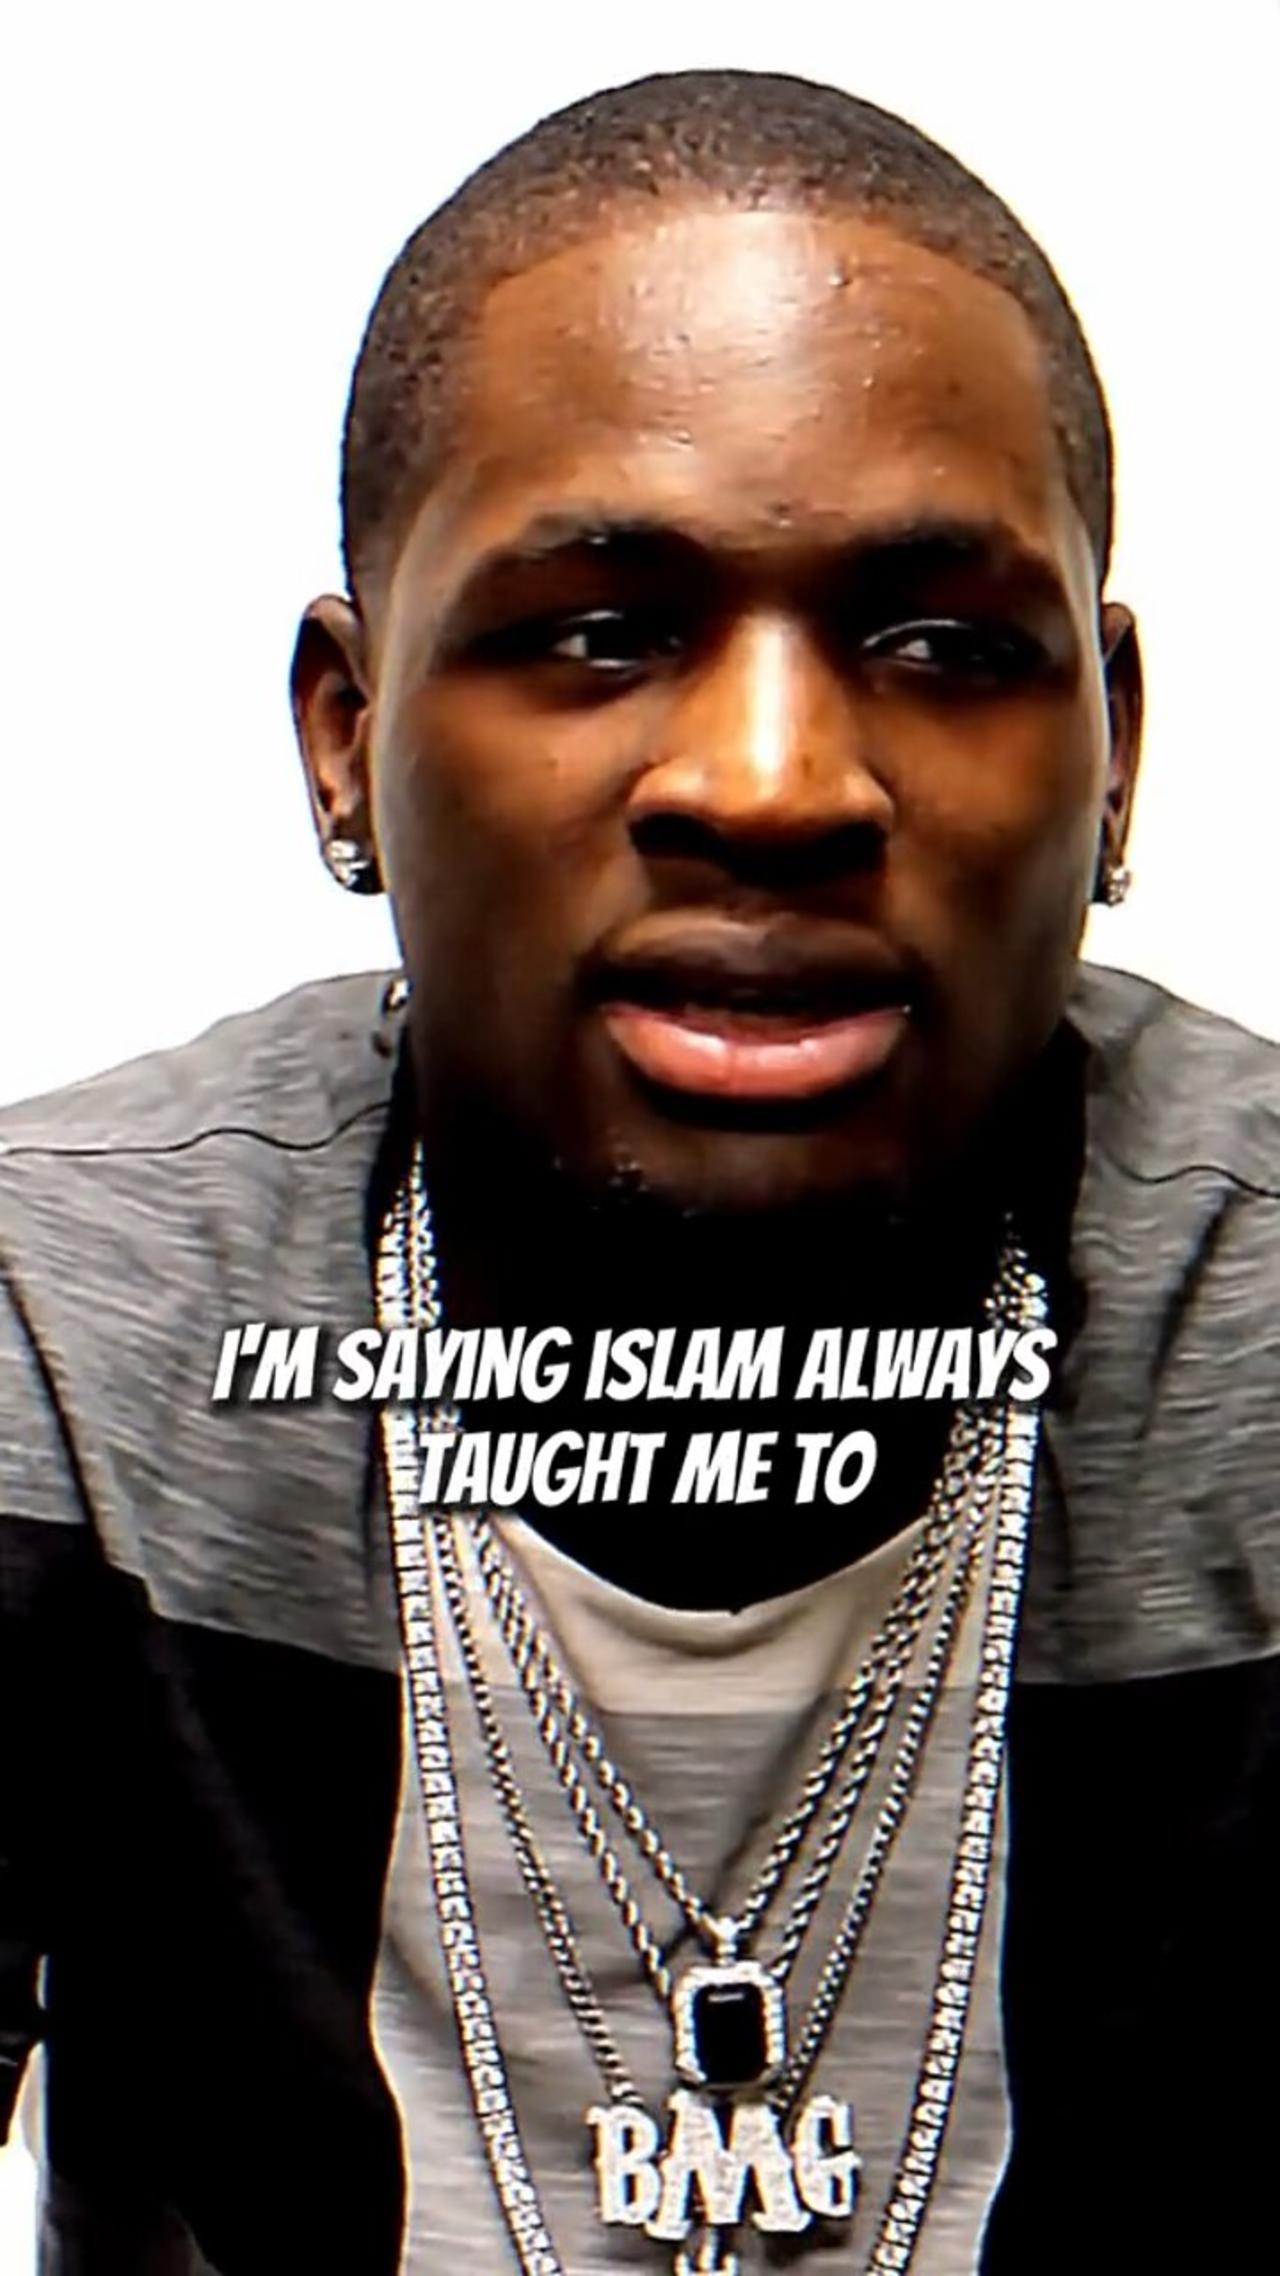 Atlanta rapper talks about Islam